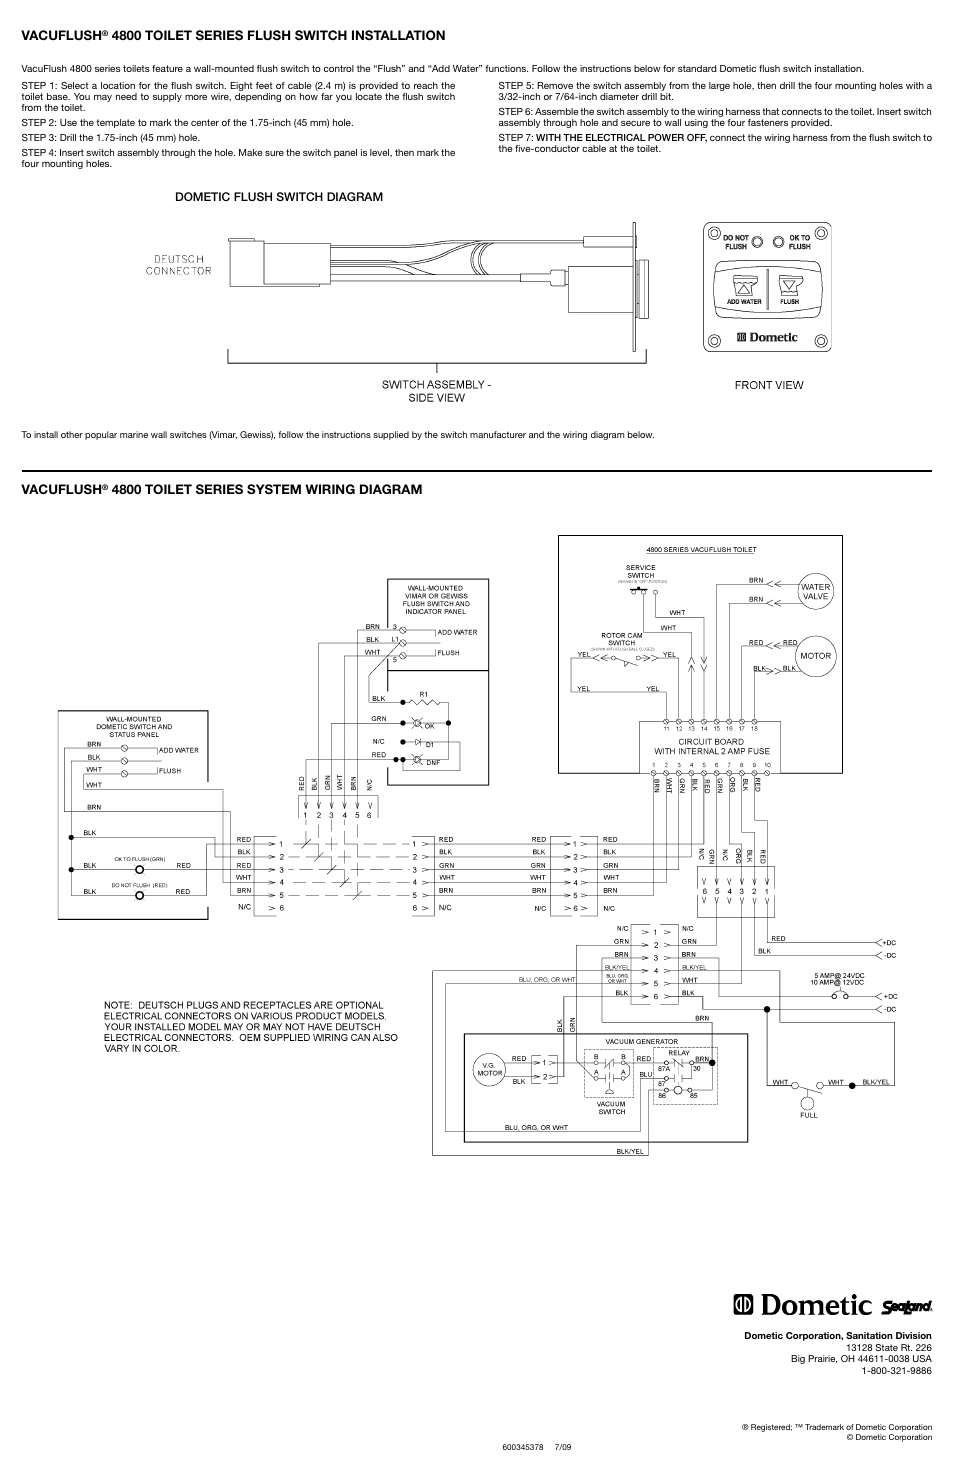 Vacuflush  4800 Toilet Series System Wiring Diagram  4800